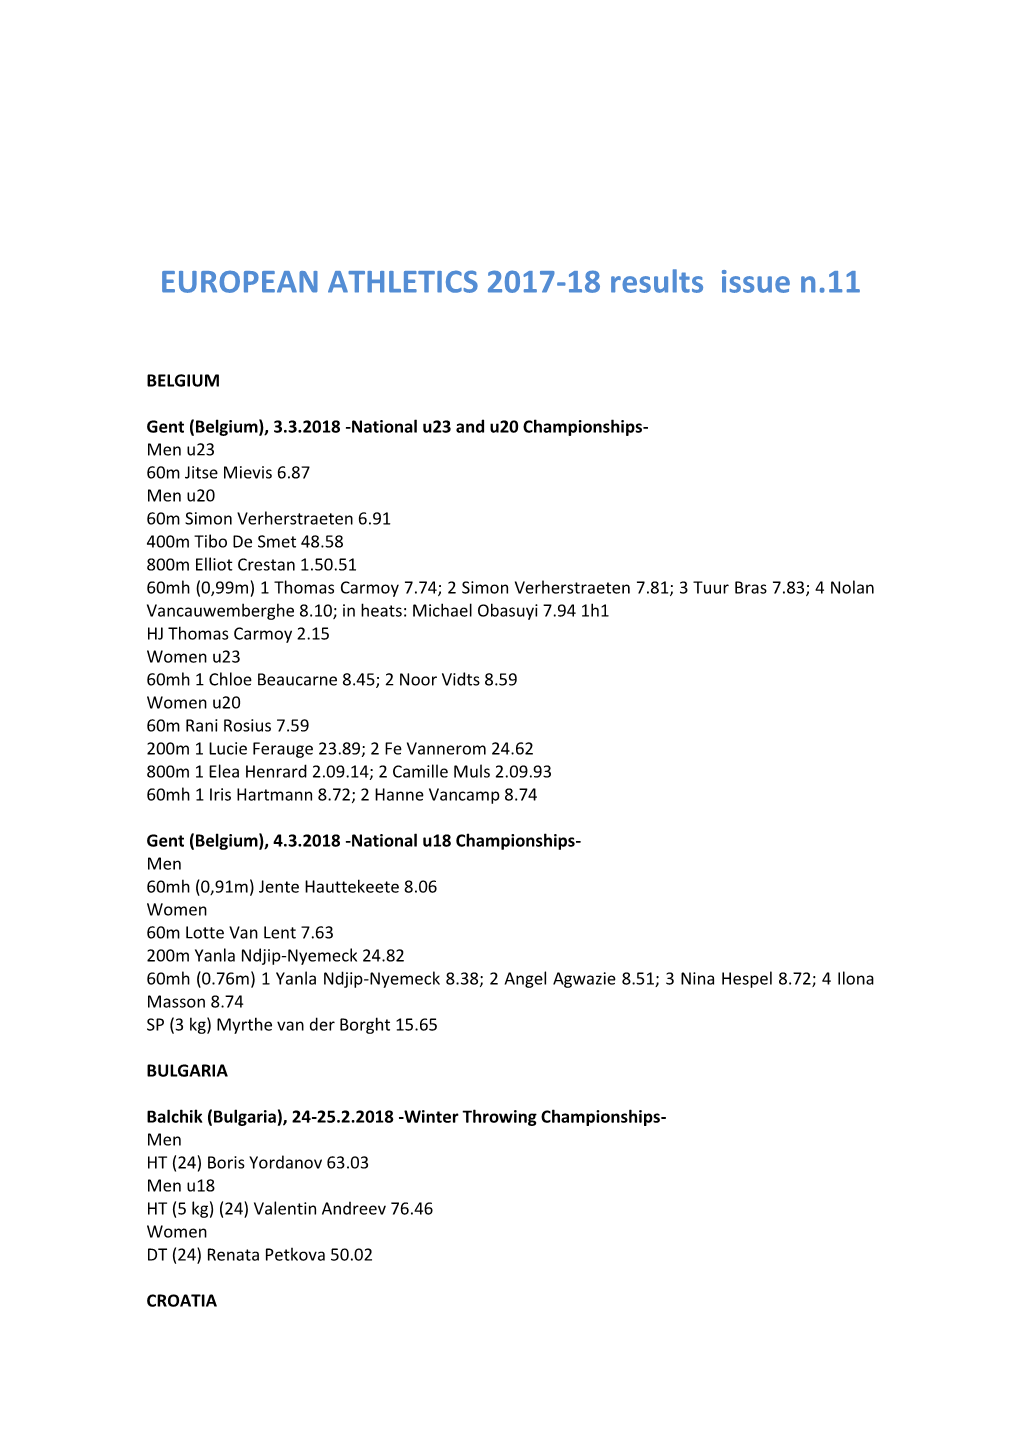 EUROPEAN ATHLETICS 2017-18 Results Issue N.11